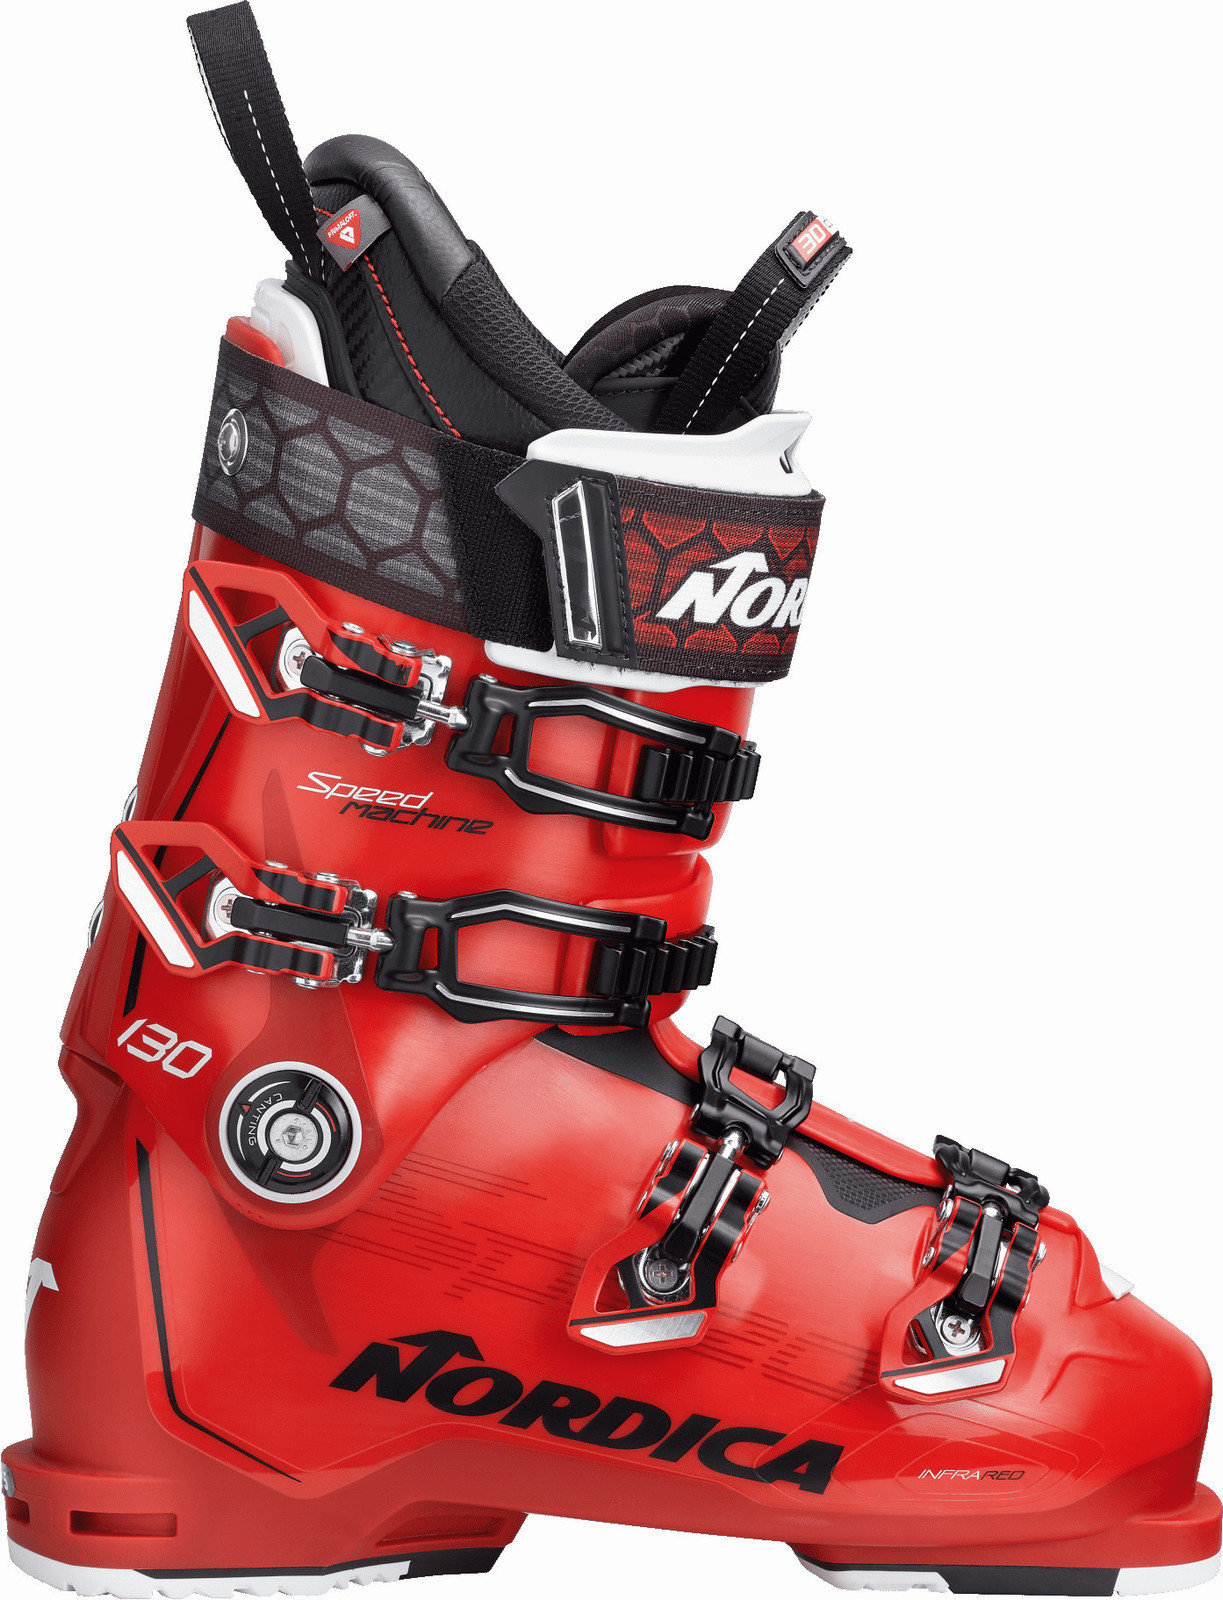 Alpine Ski Boots Nordica Speedmachine 130 Red-Black-White 27.5 18/19